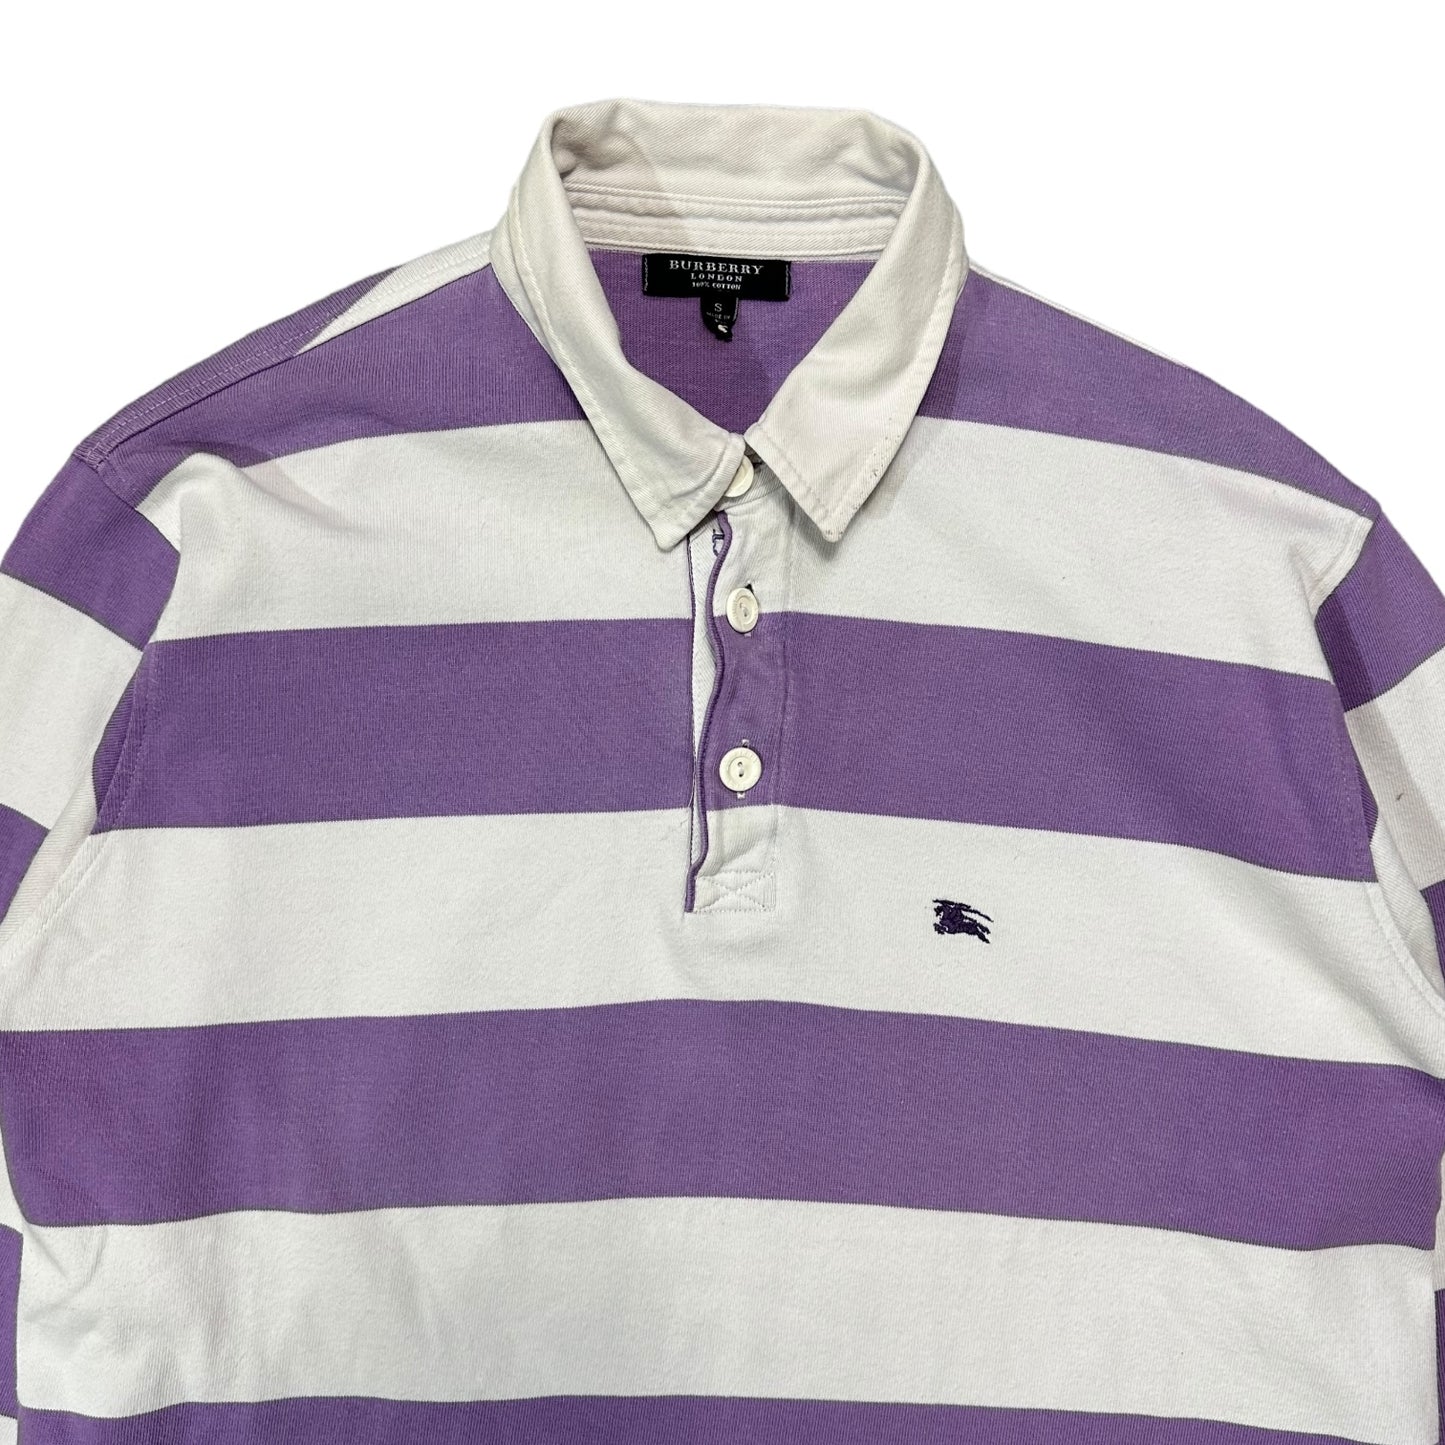 2000s Burberry London Striped Polo Shirt